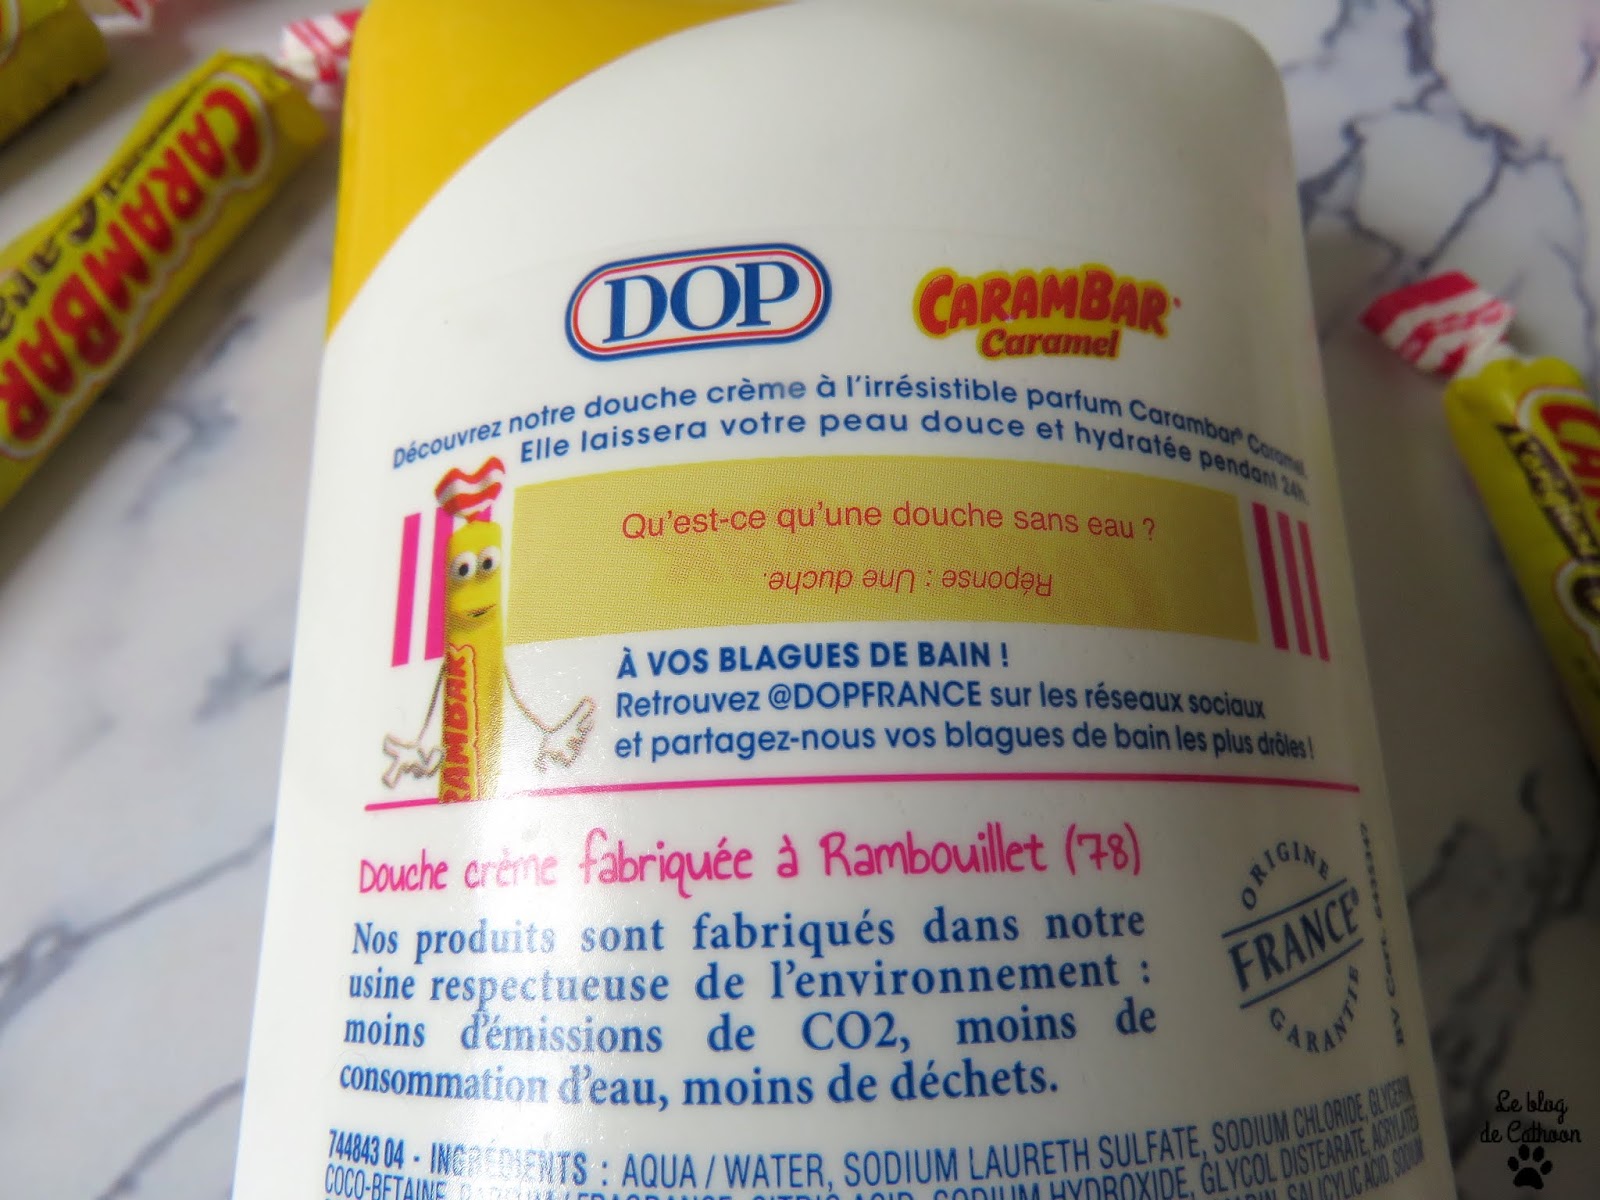 Carambar Caramel - Douche Crème - Douceurs d'Enfance - Dop